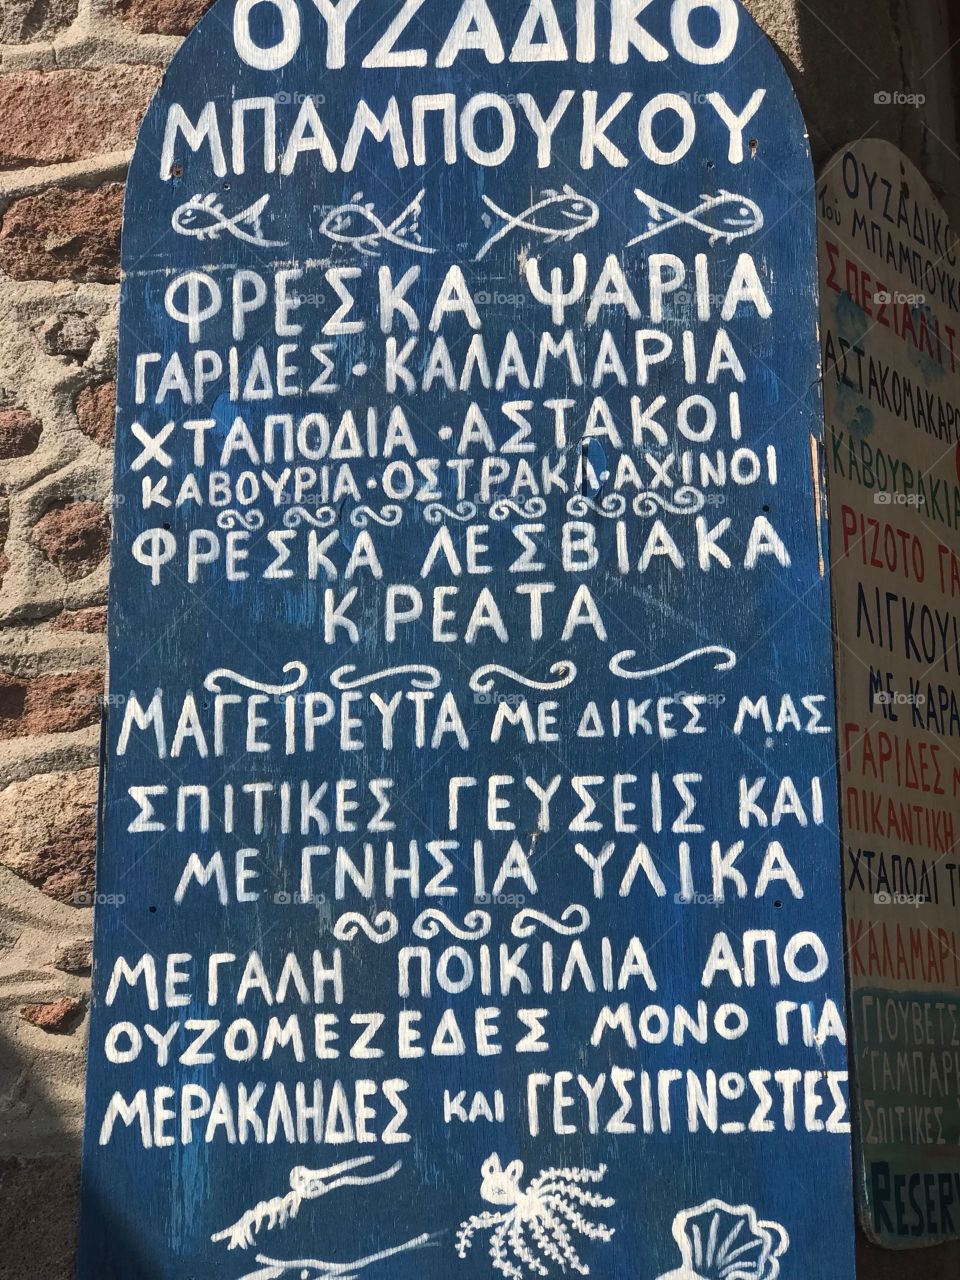 Greek restaurant menu